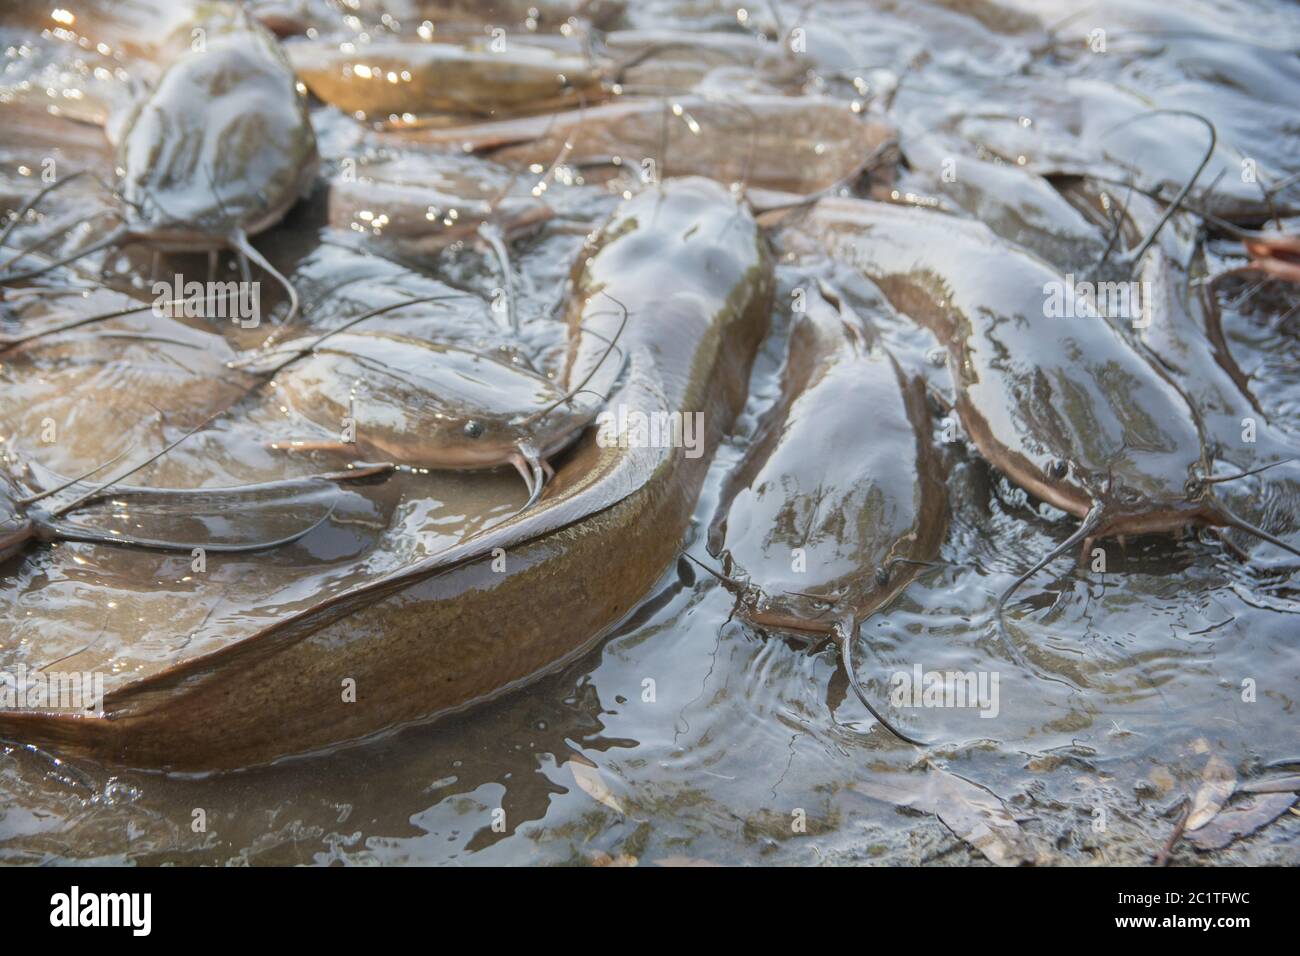 Group of African Sharptooth Catfish (Clarias gariepinus) Stock Photo